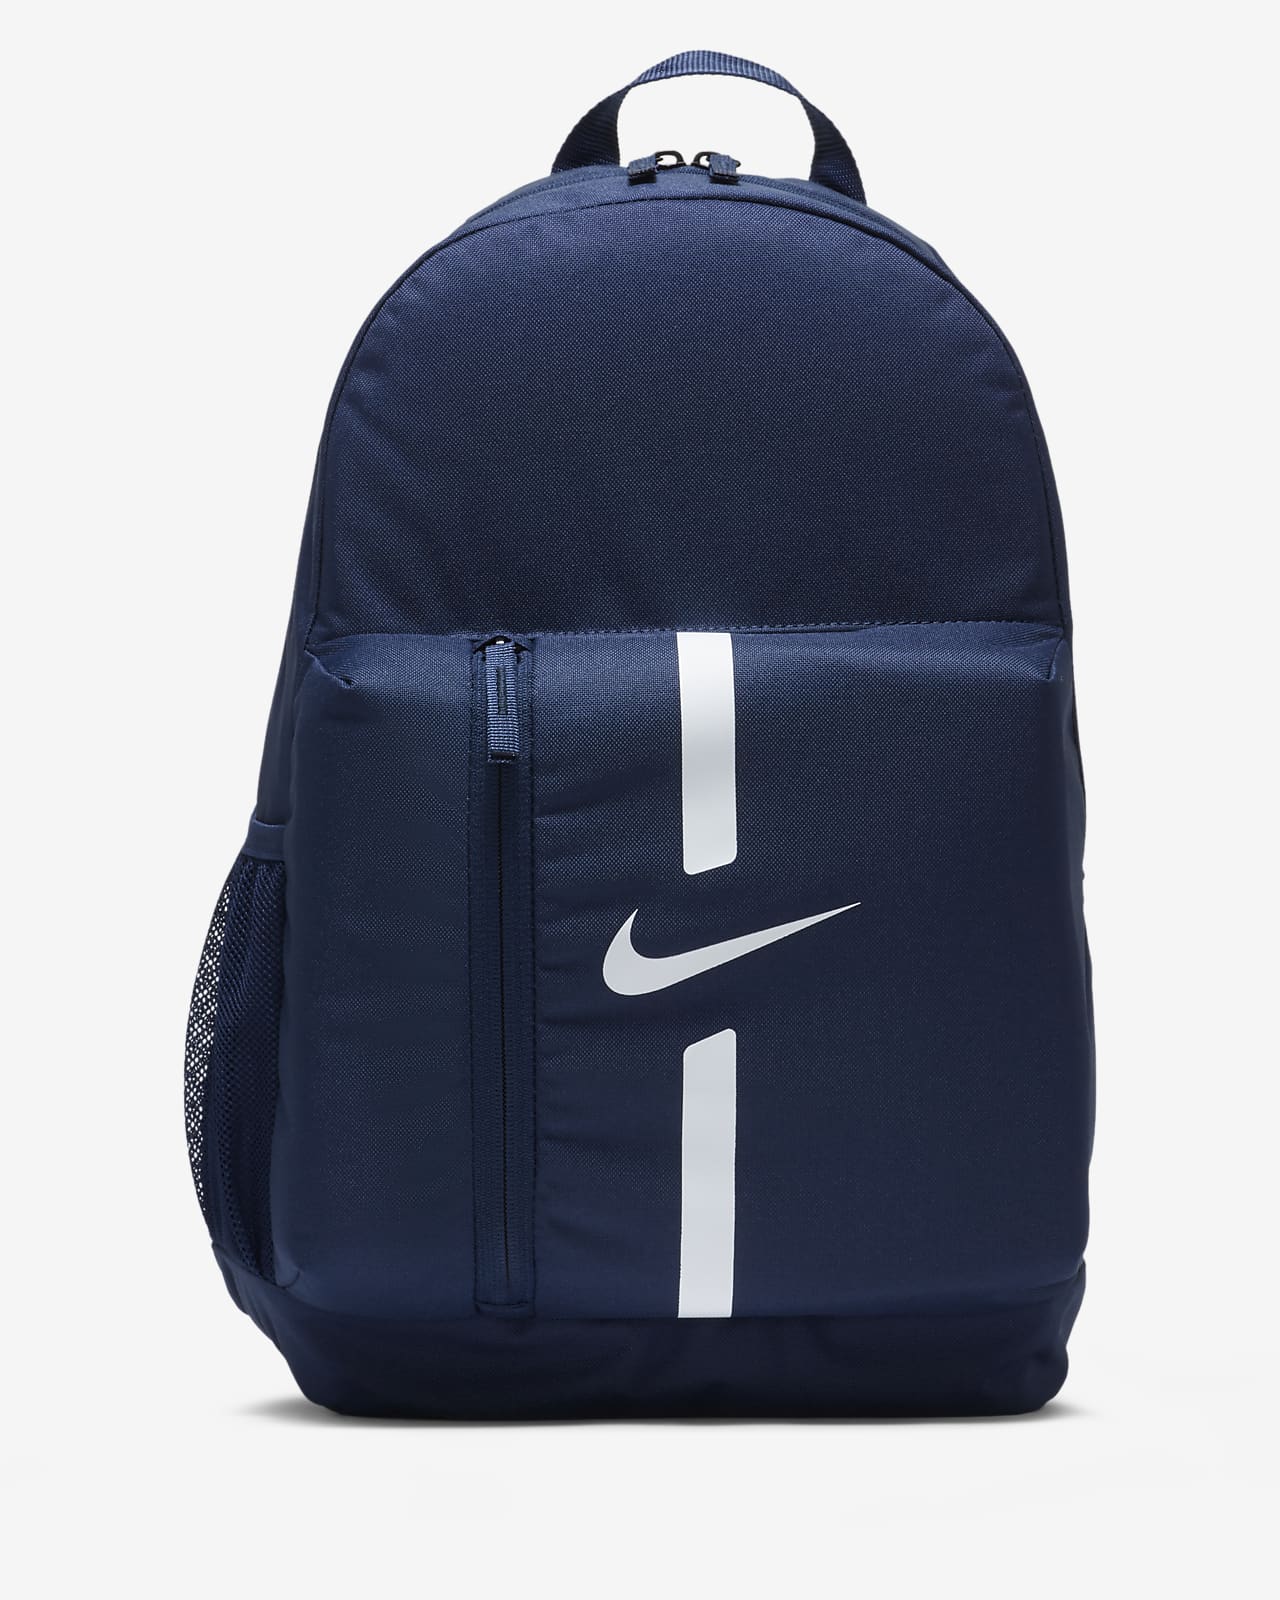 Comparar considerado impresión Nike Academy Team Football Backpack (22L). Nike AU